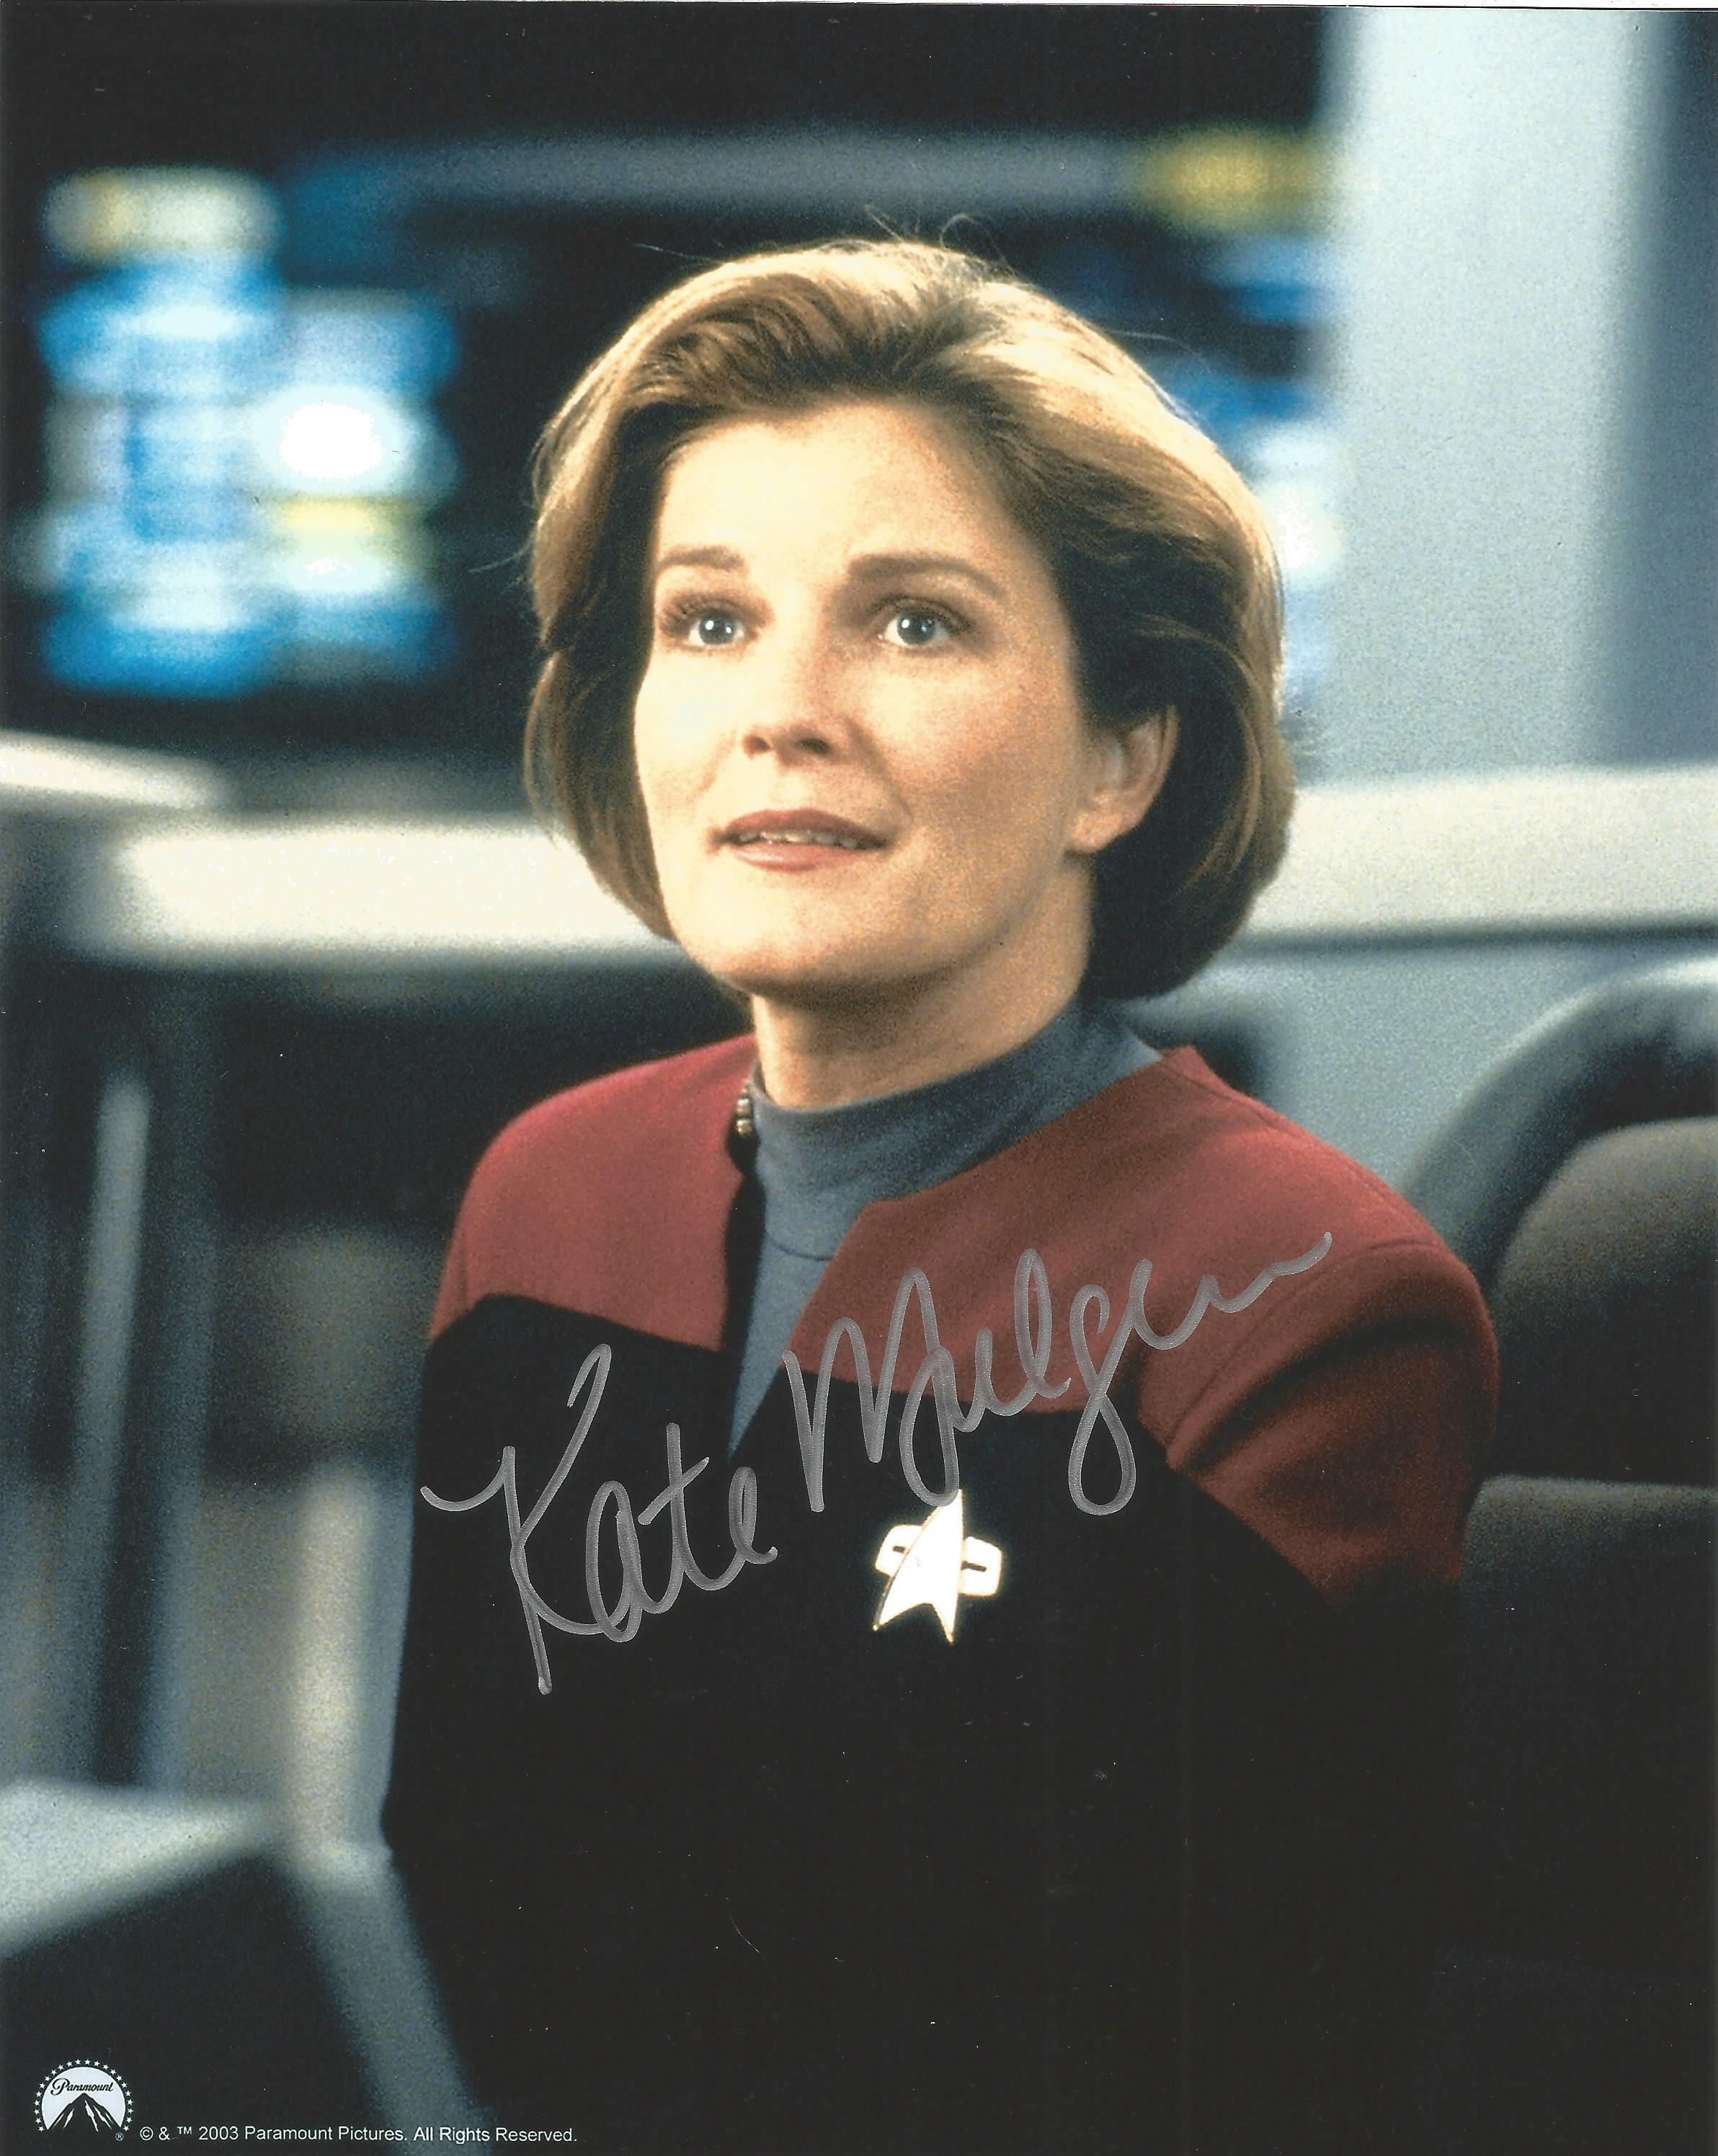 Star Trek. Kate Mulgrew Kathryn Janeway Handsigned 10x8 colour Photo. Katherine Kiernan Maria